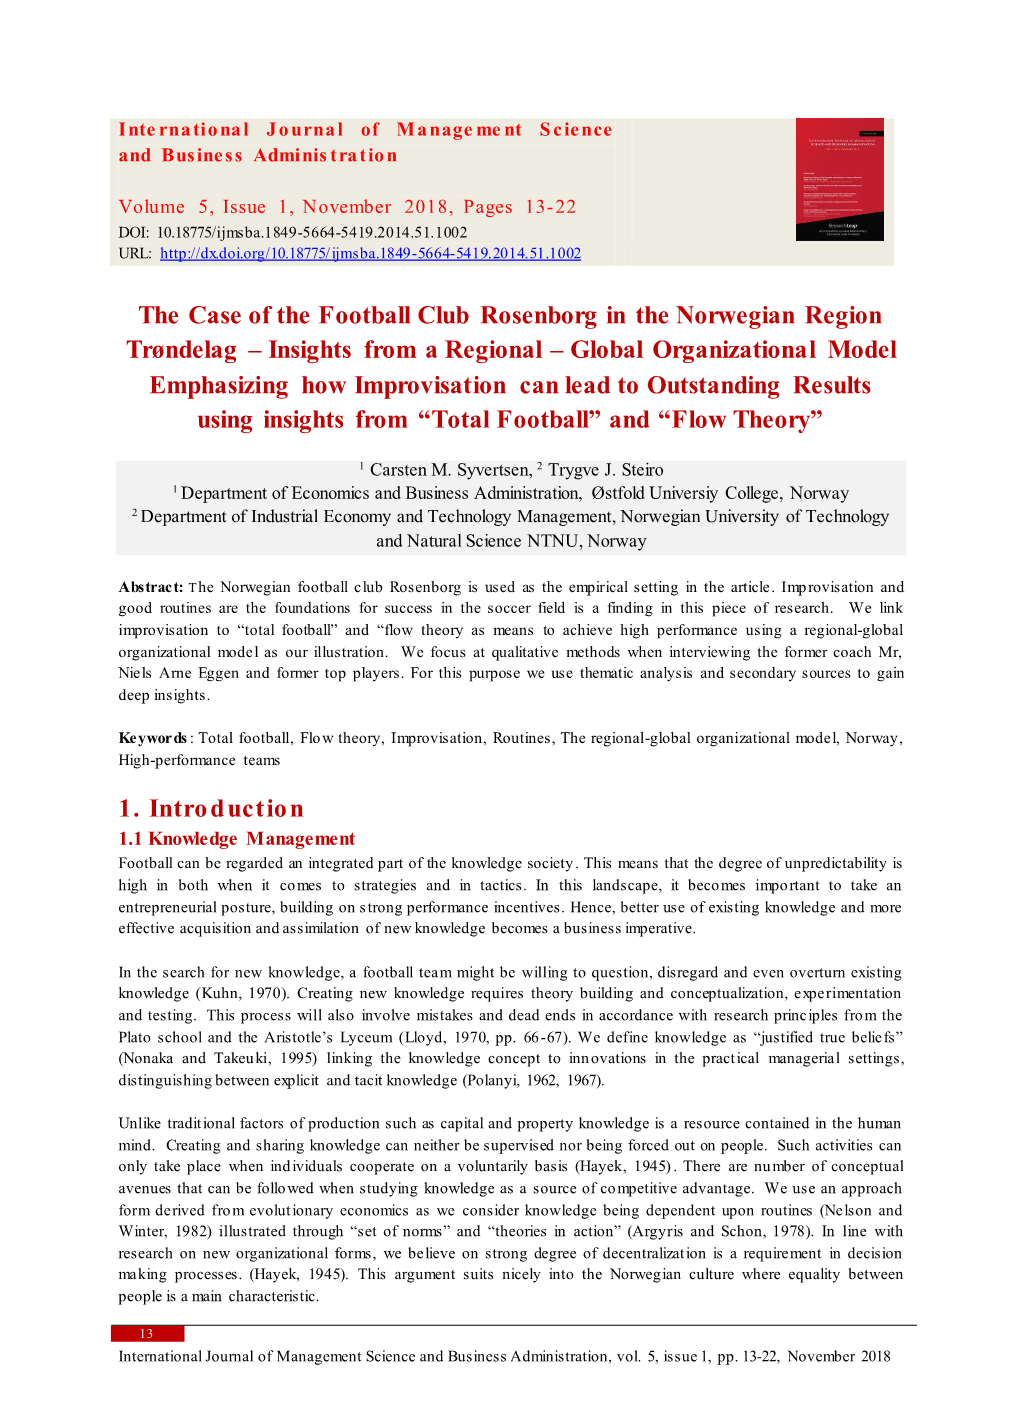 The Case of the Football Club Rosenborg in the Norwegian